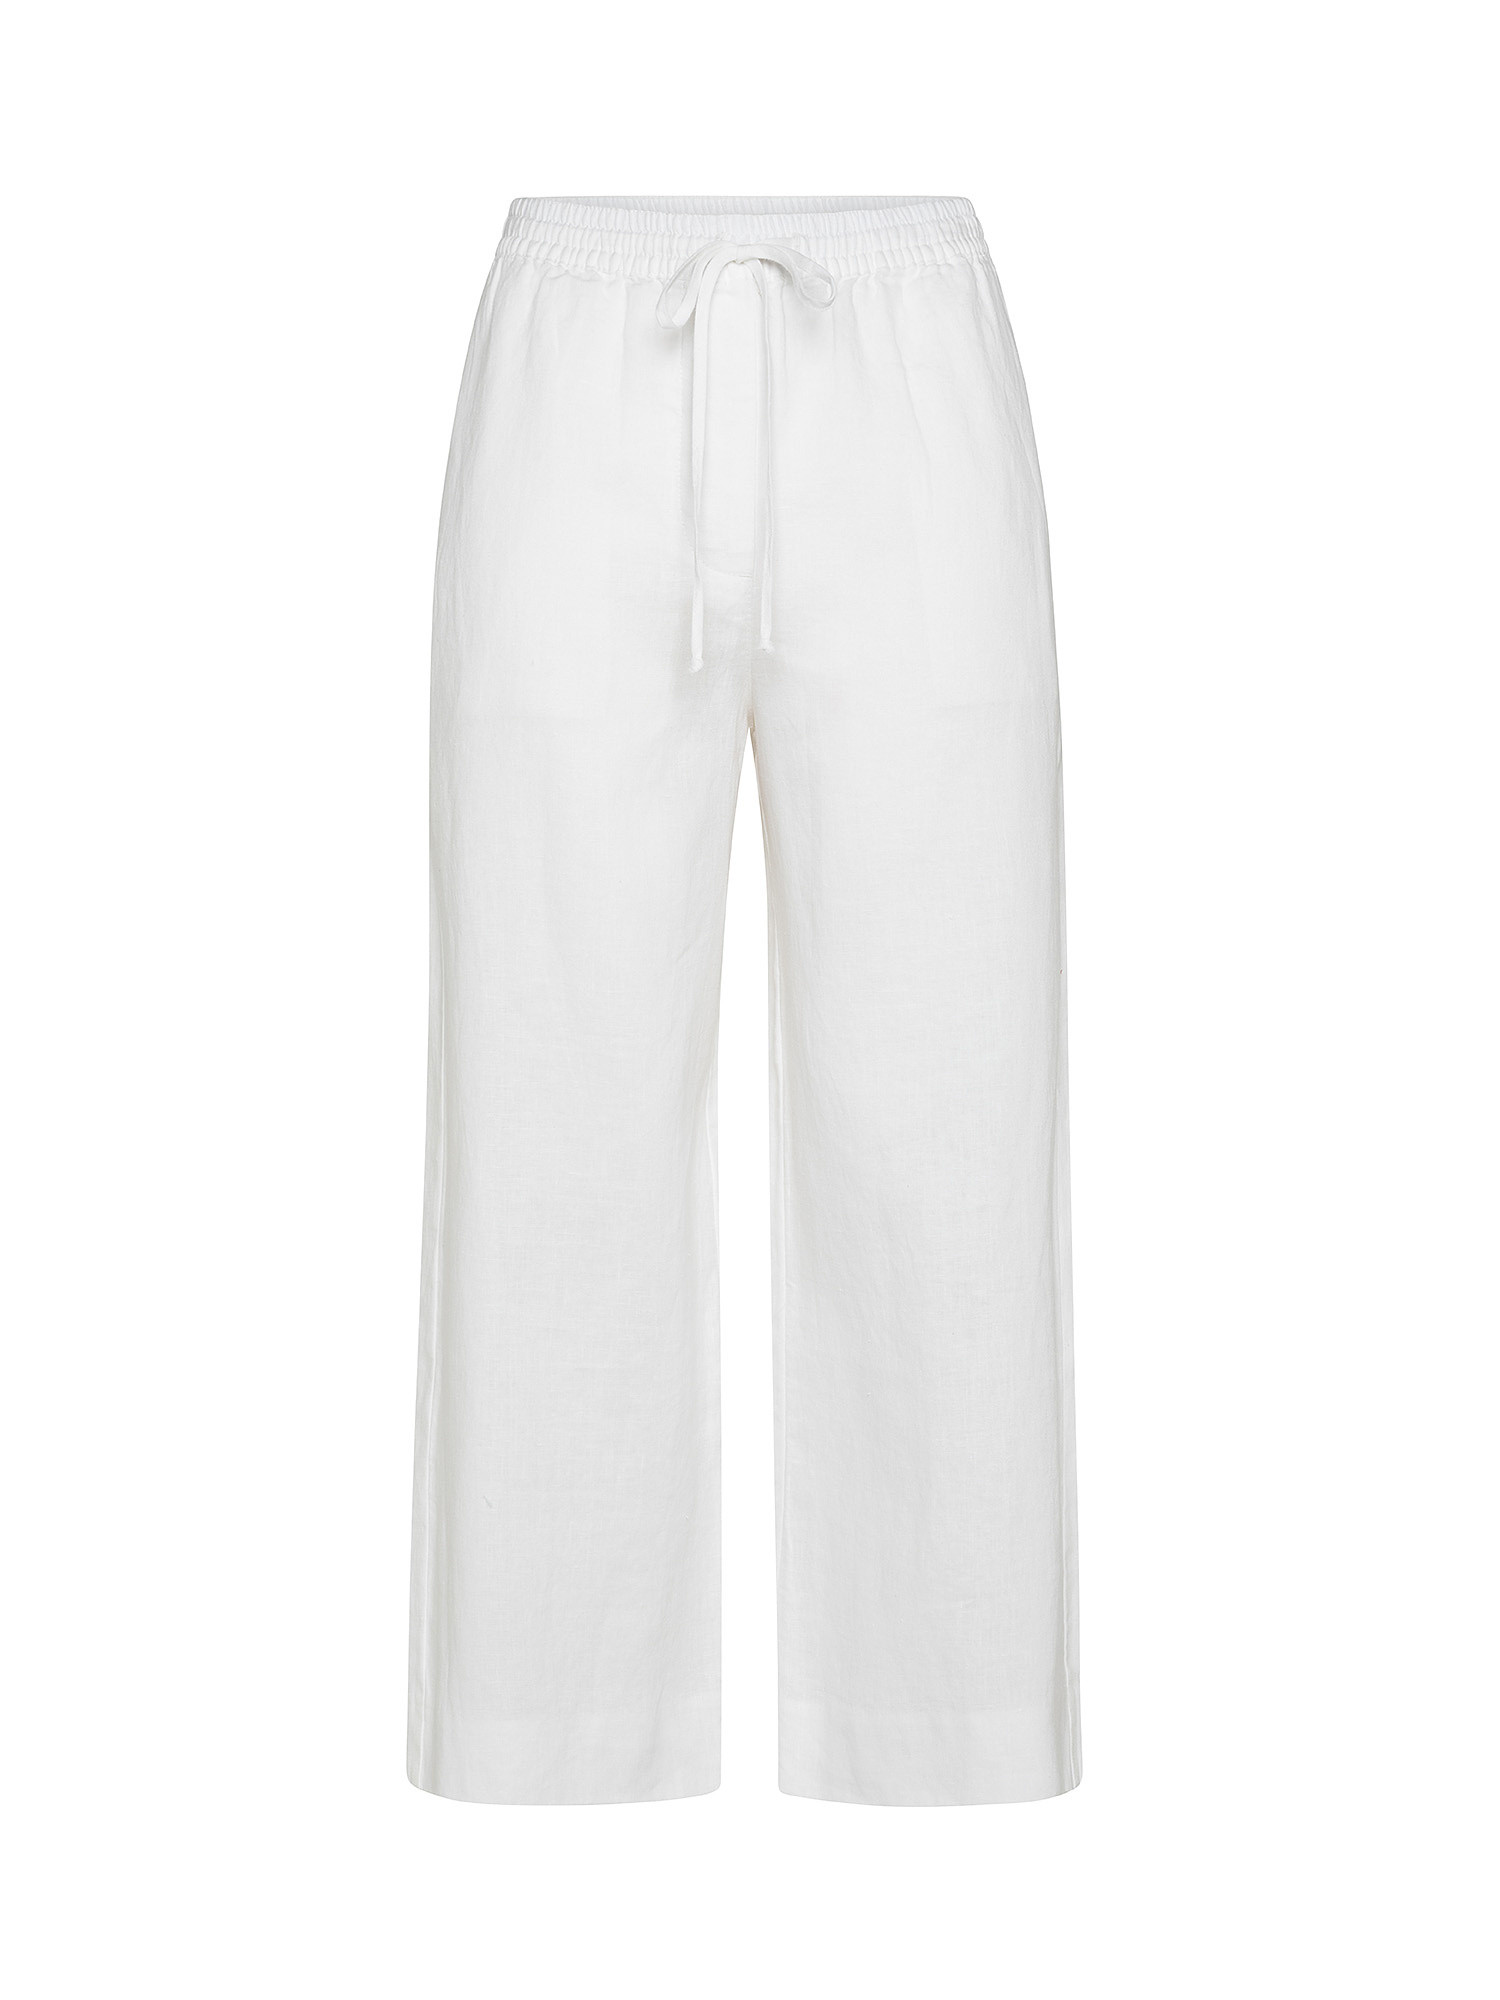 Pantalone a gamba ampia in lino, Bianco, large image number 0